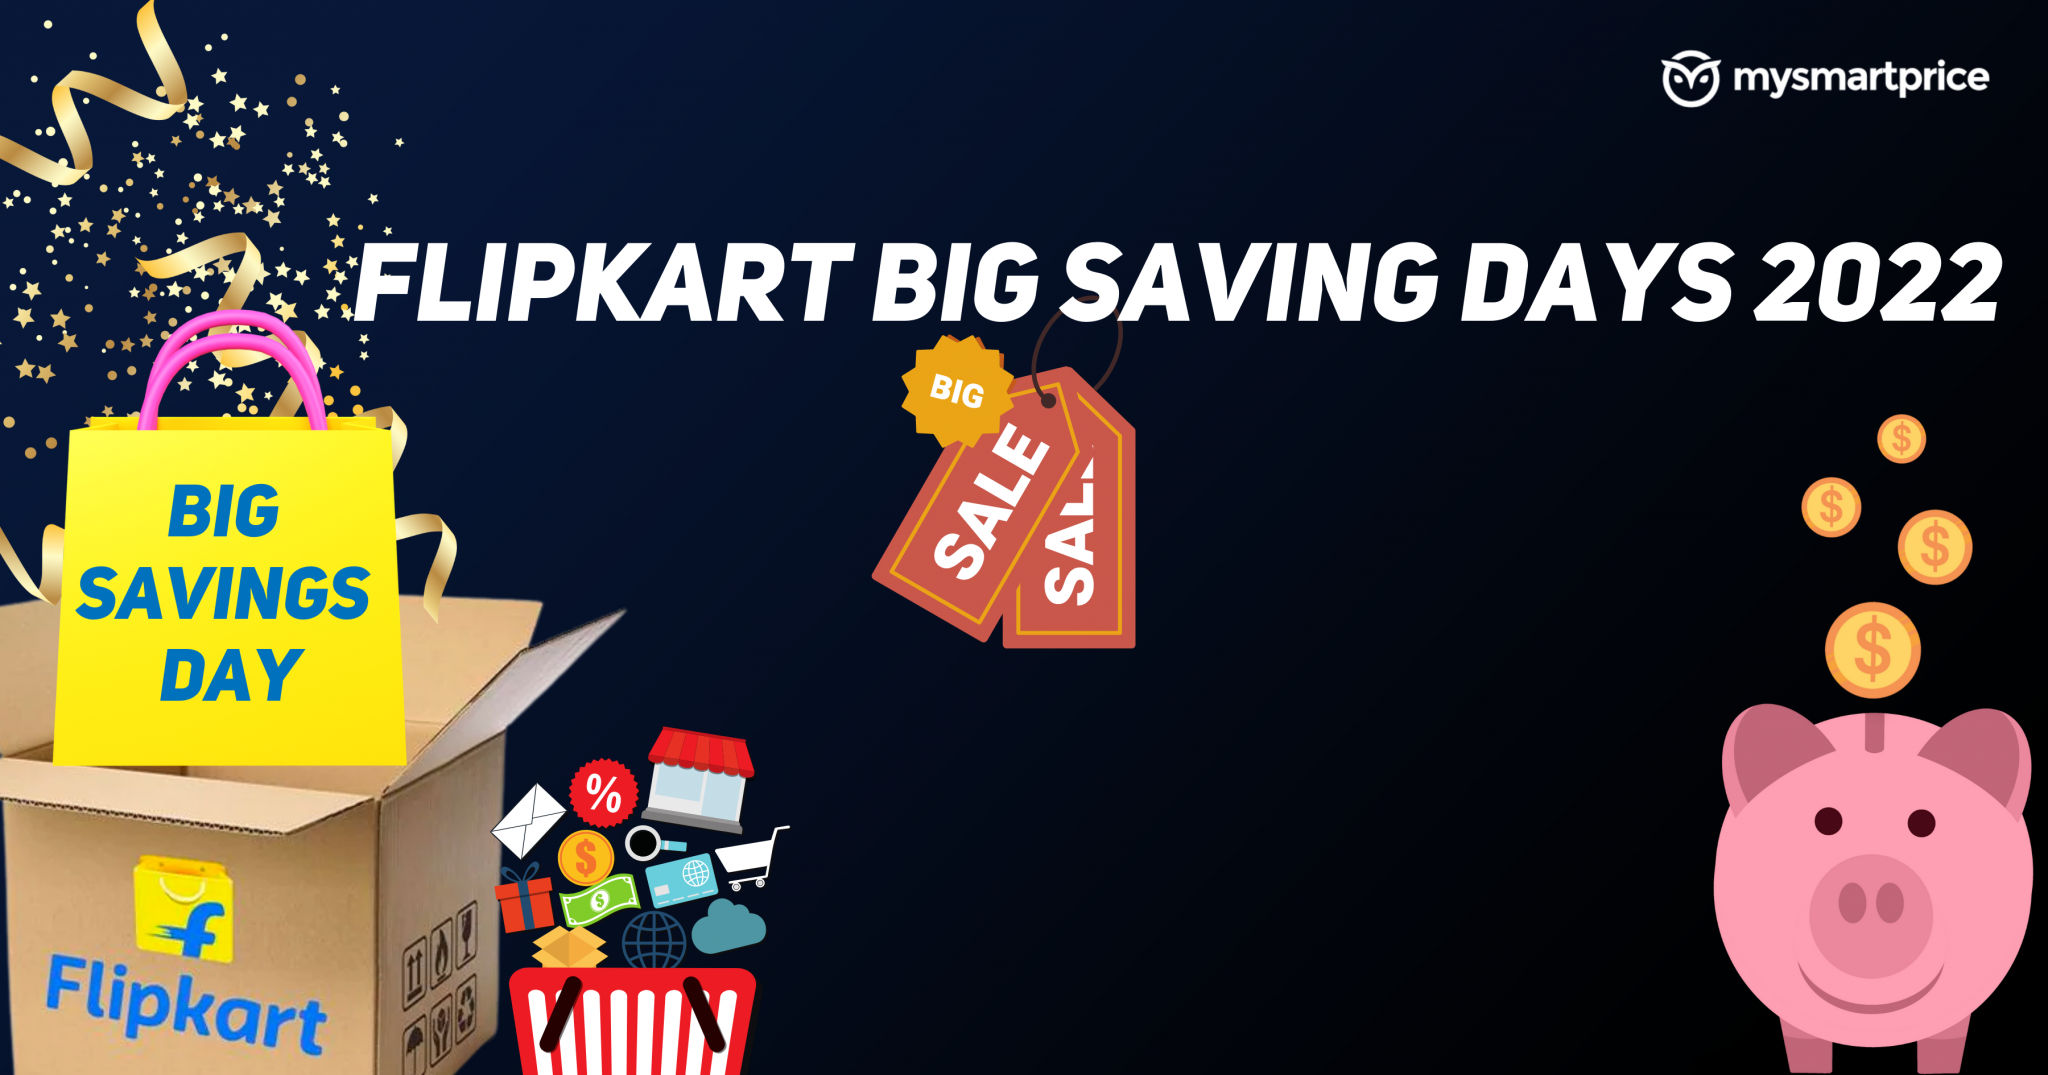 Flipkart Big Saving Days 2022 Sale Dates, Top Offers, Expected Deals